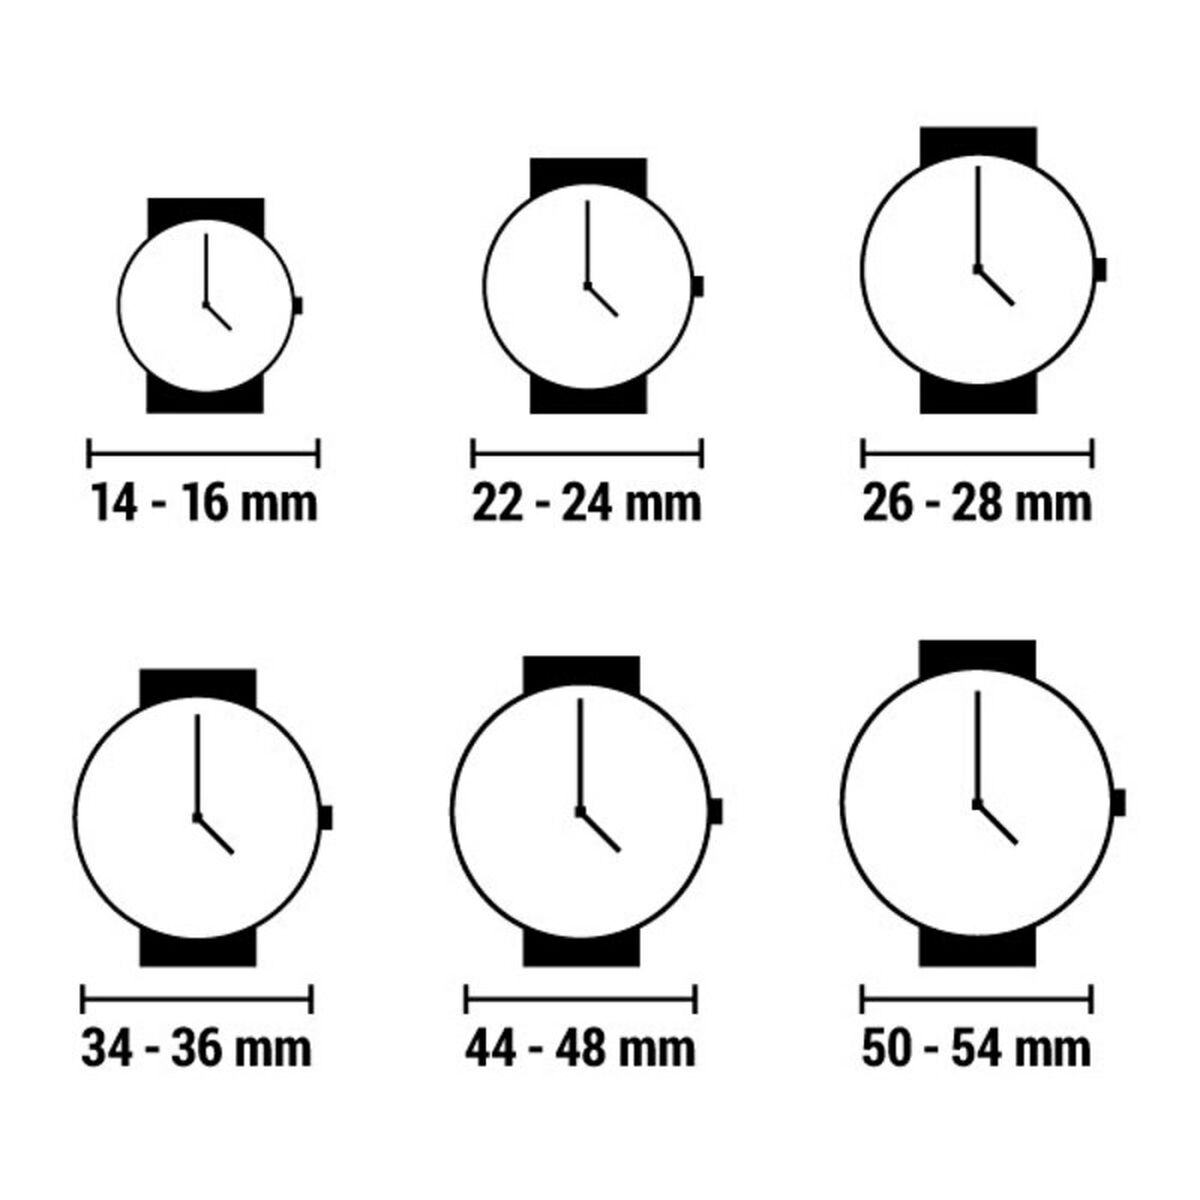 Horloge Dames GC Watches Y22005L3 (Ø 34 mm)